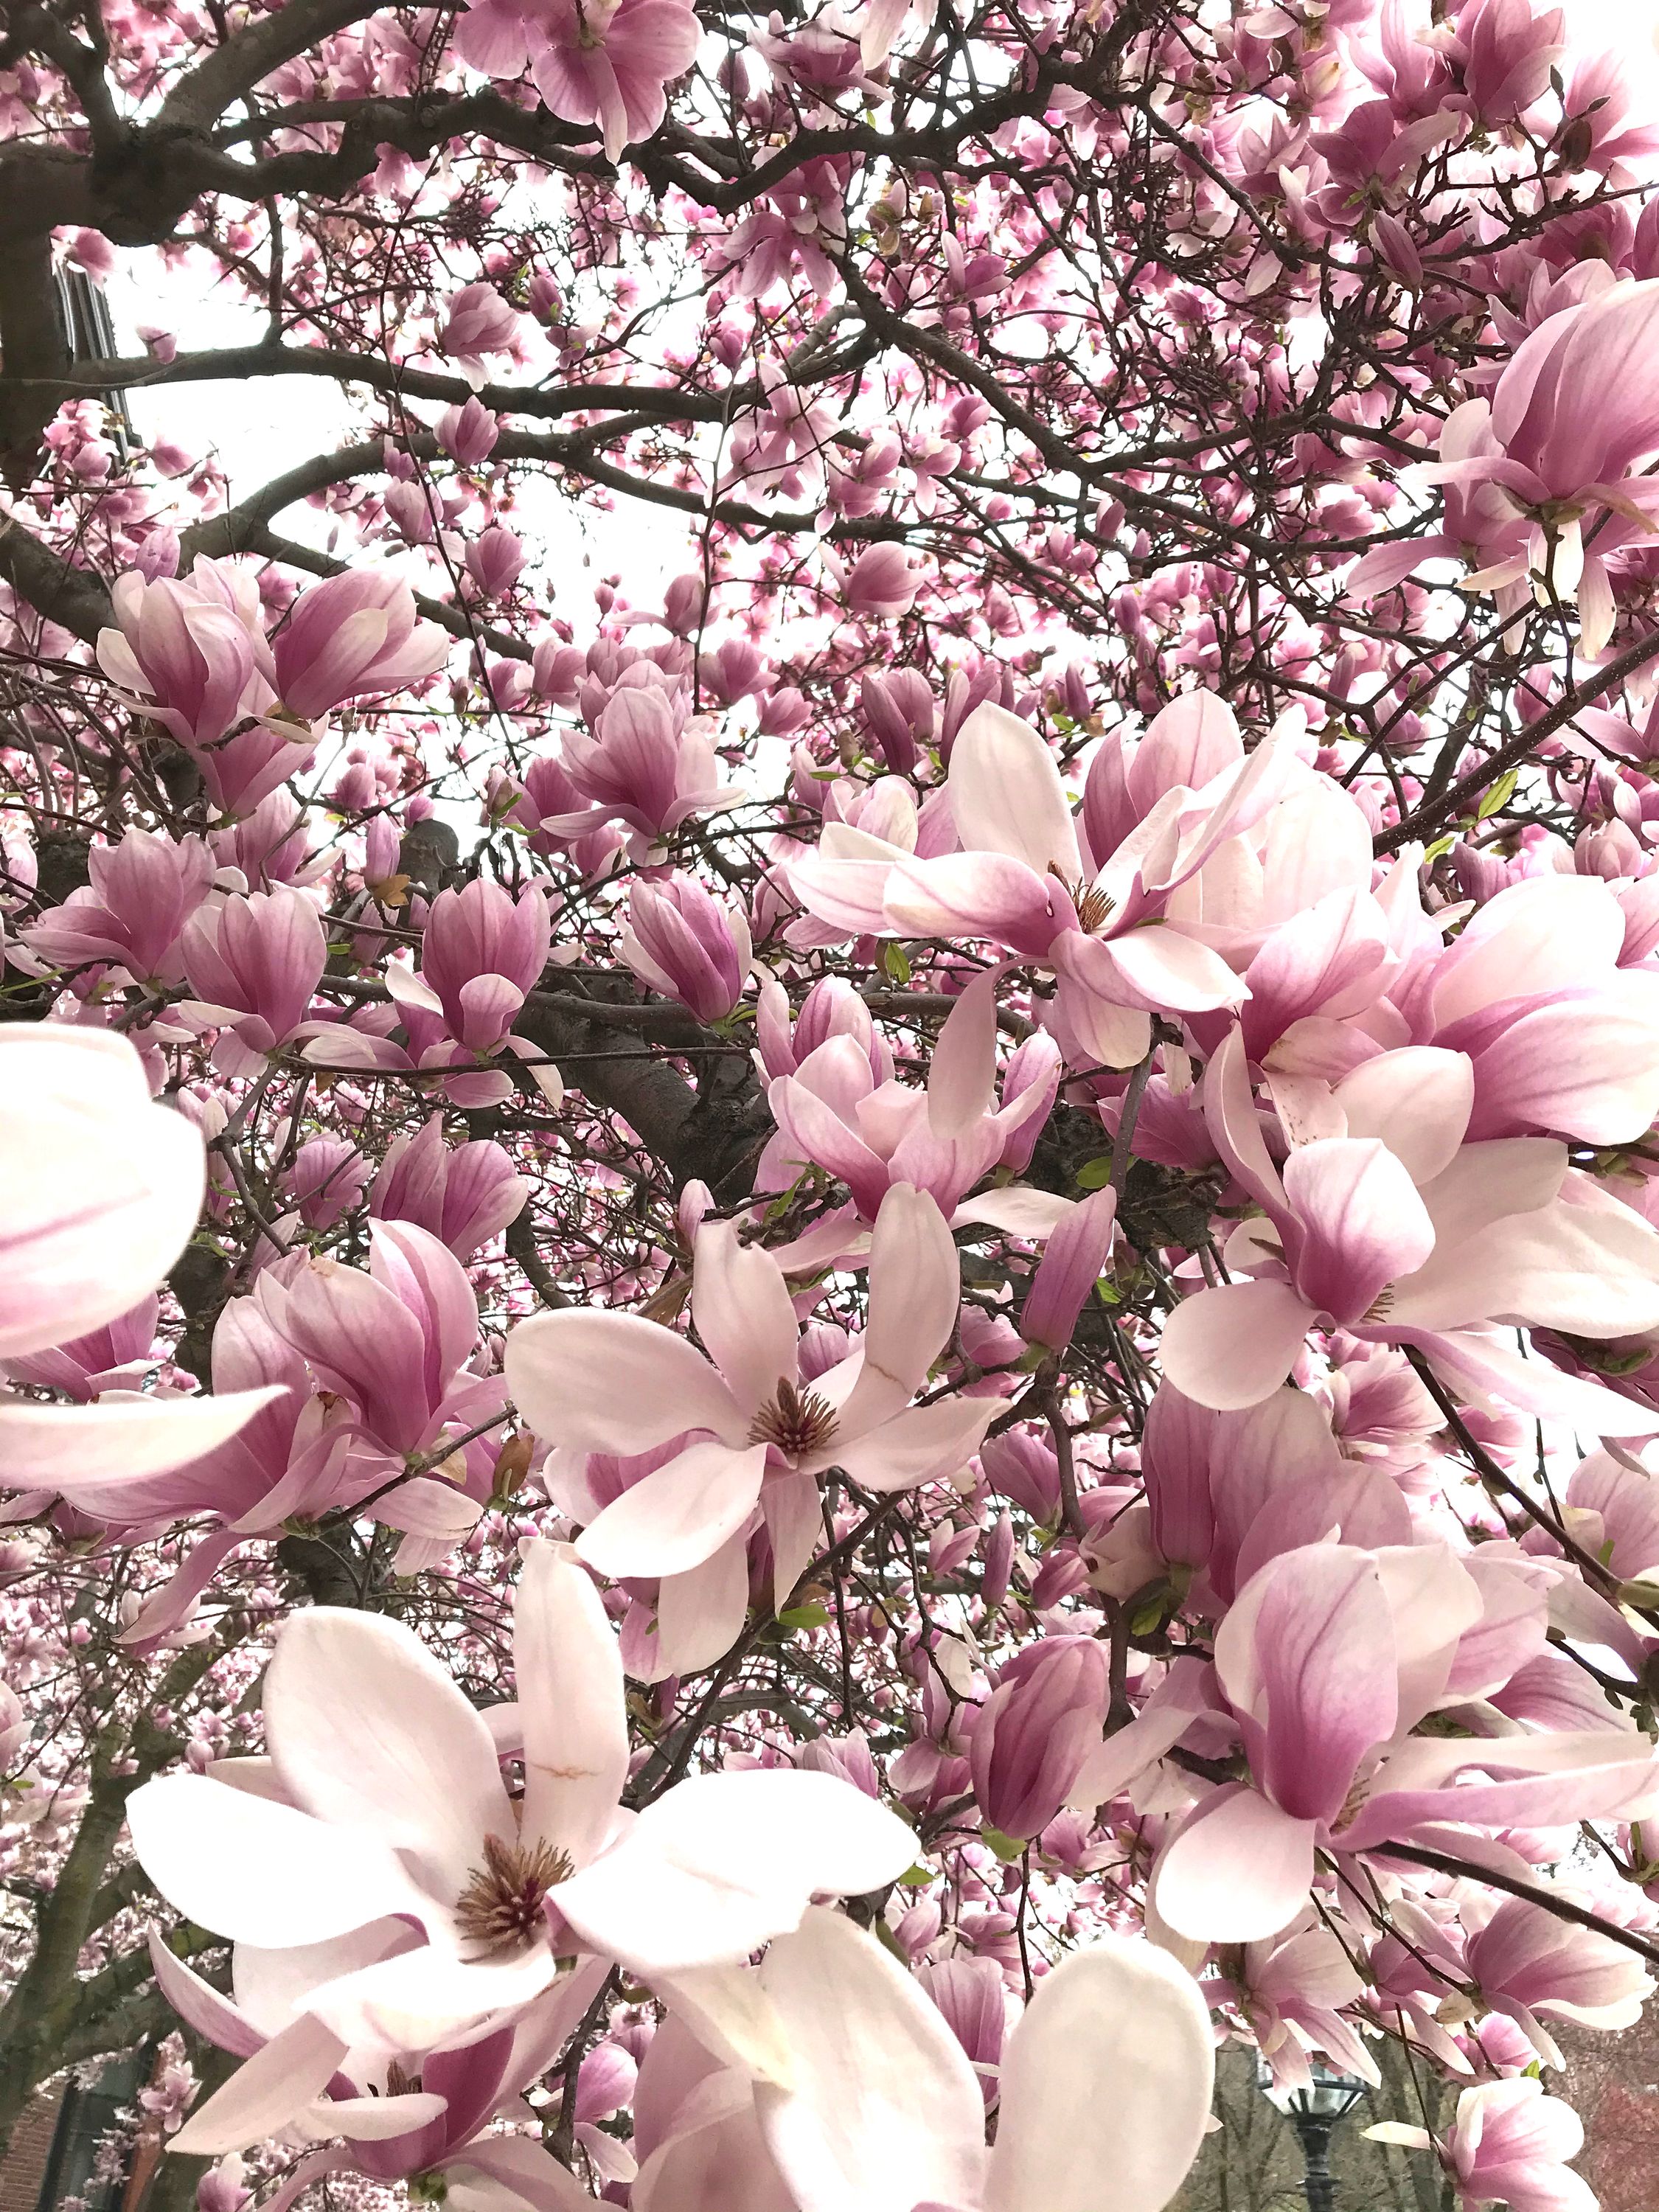 A magnolia in full bloom